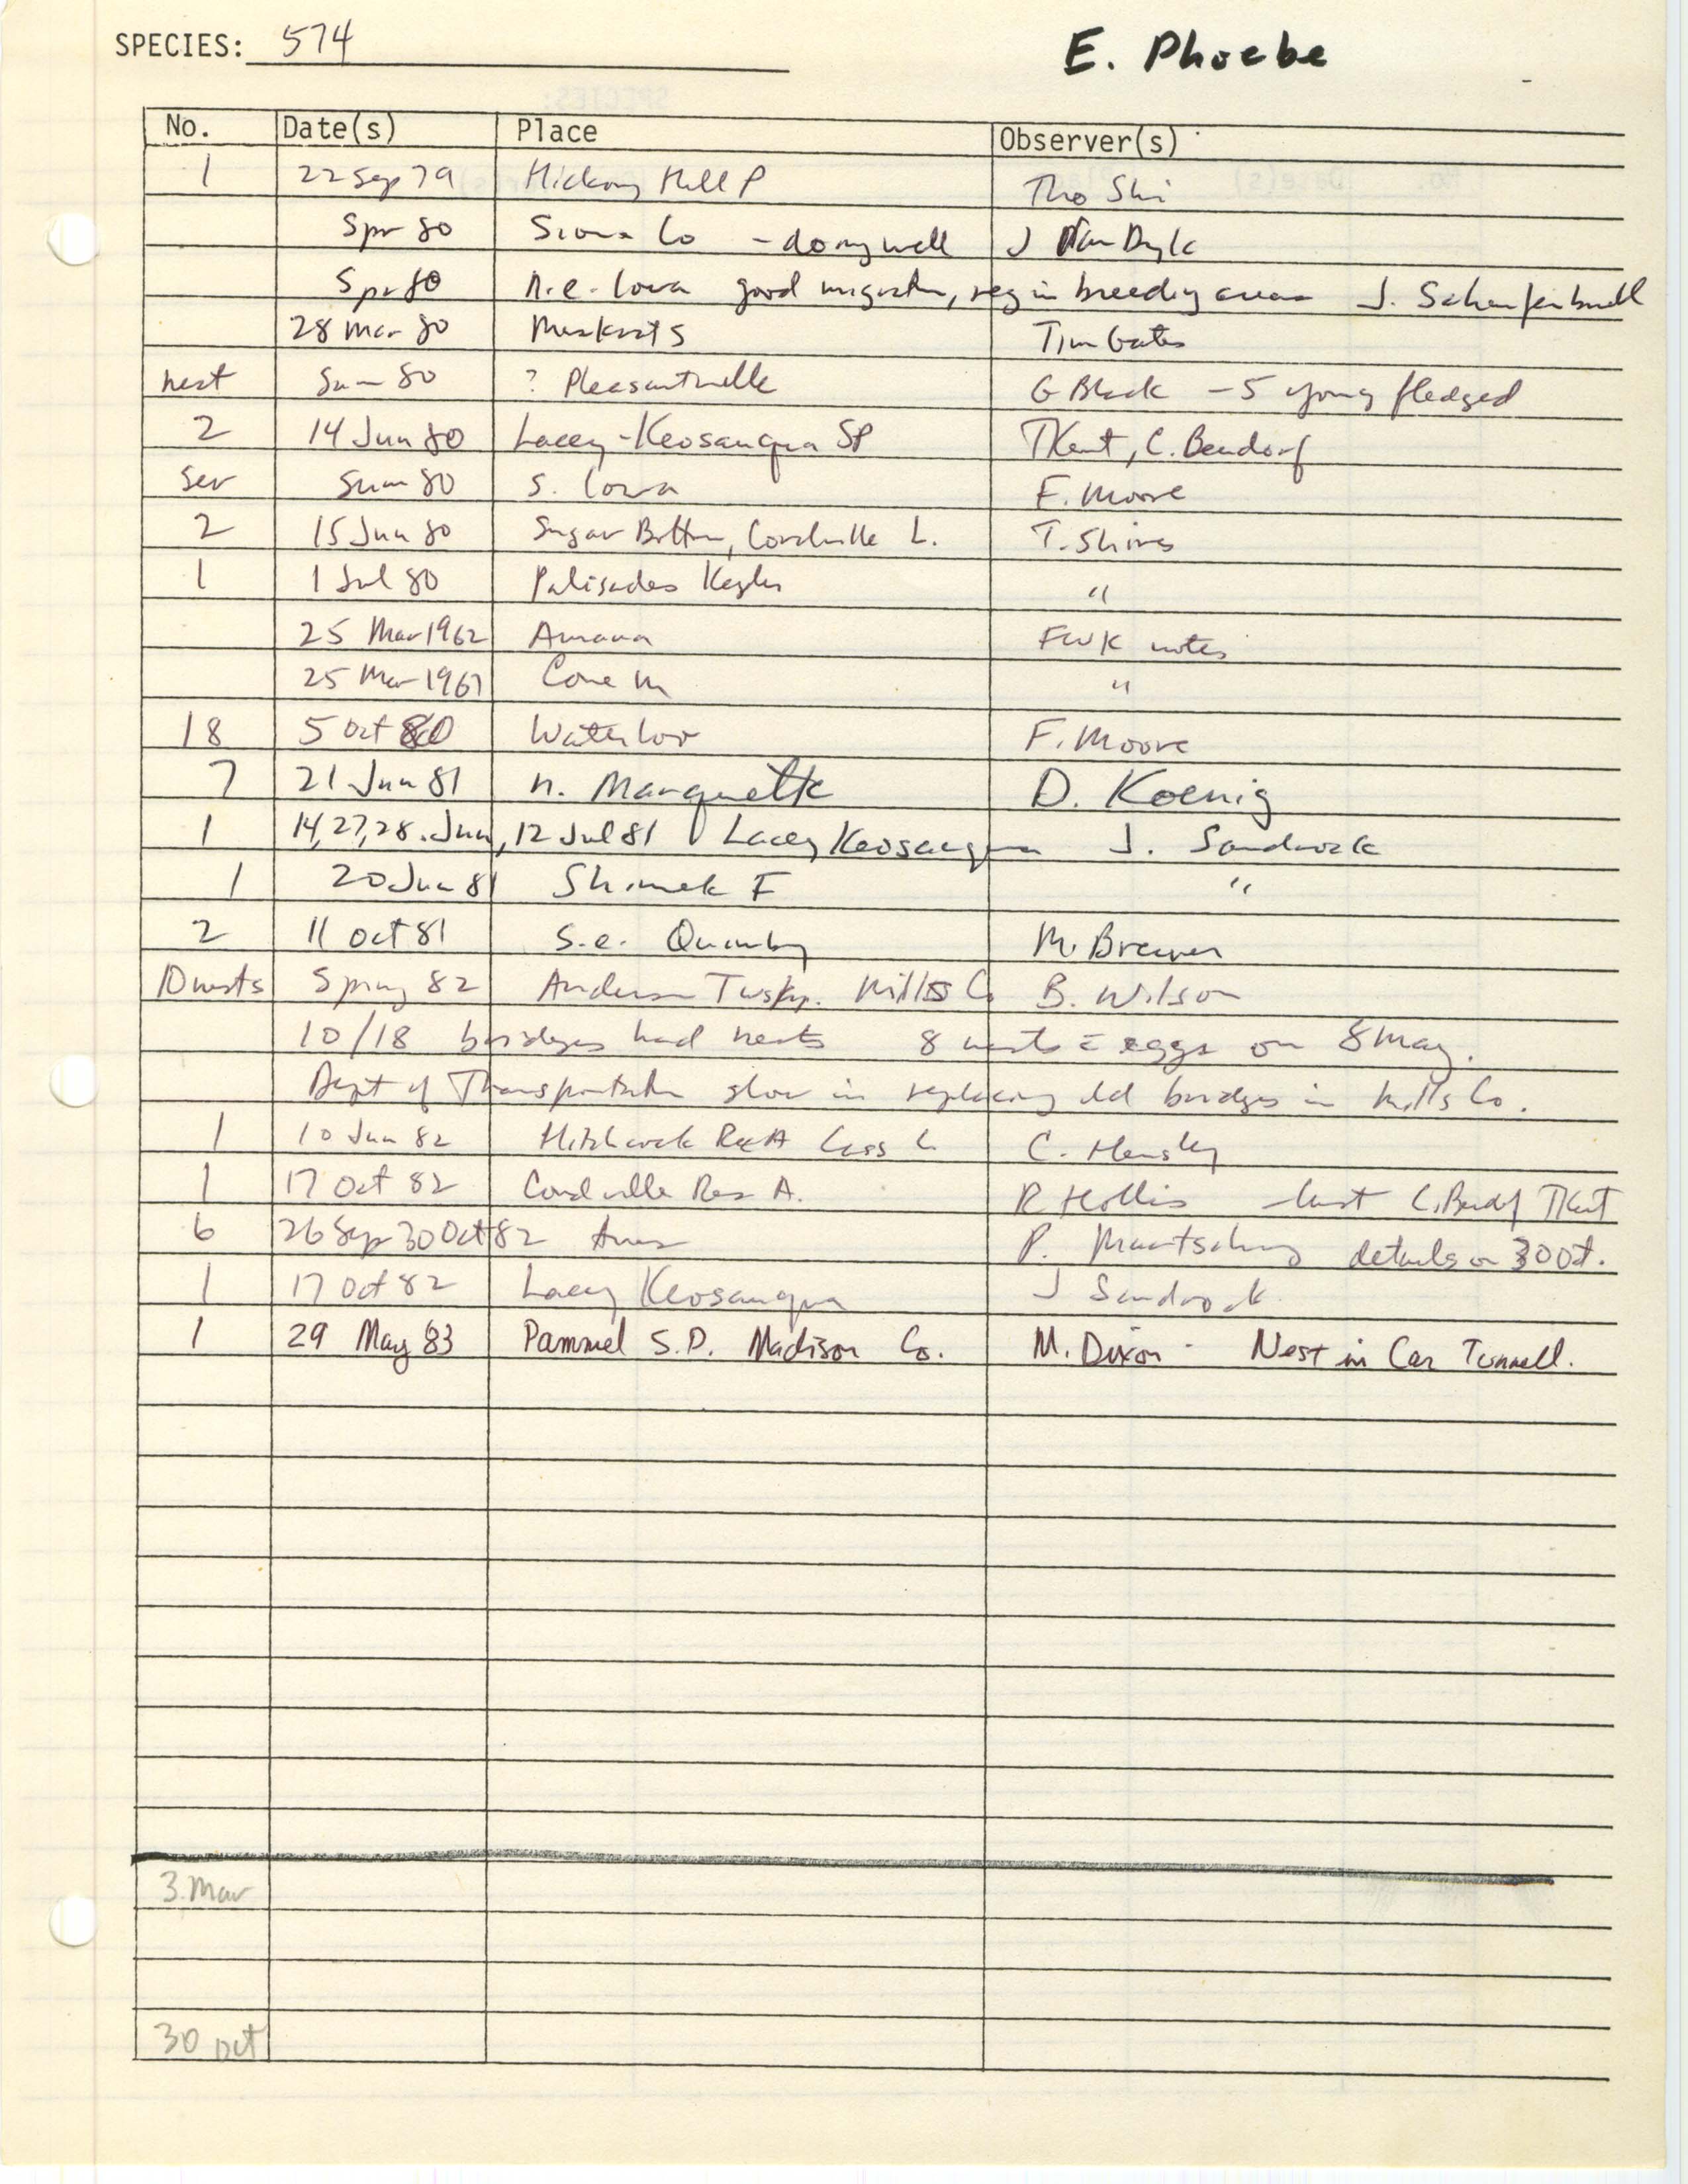 Iowa Ornithologists' Union, field report compiled data, Eastern Phoebe, 1961-1983